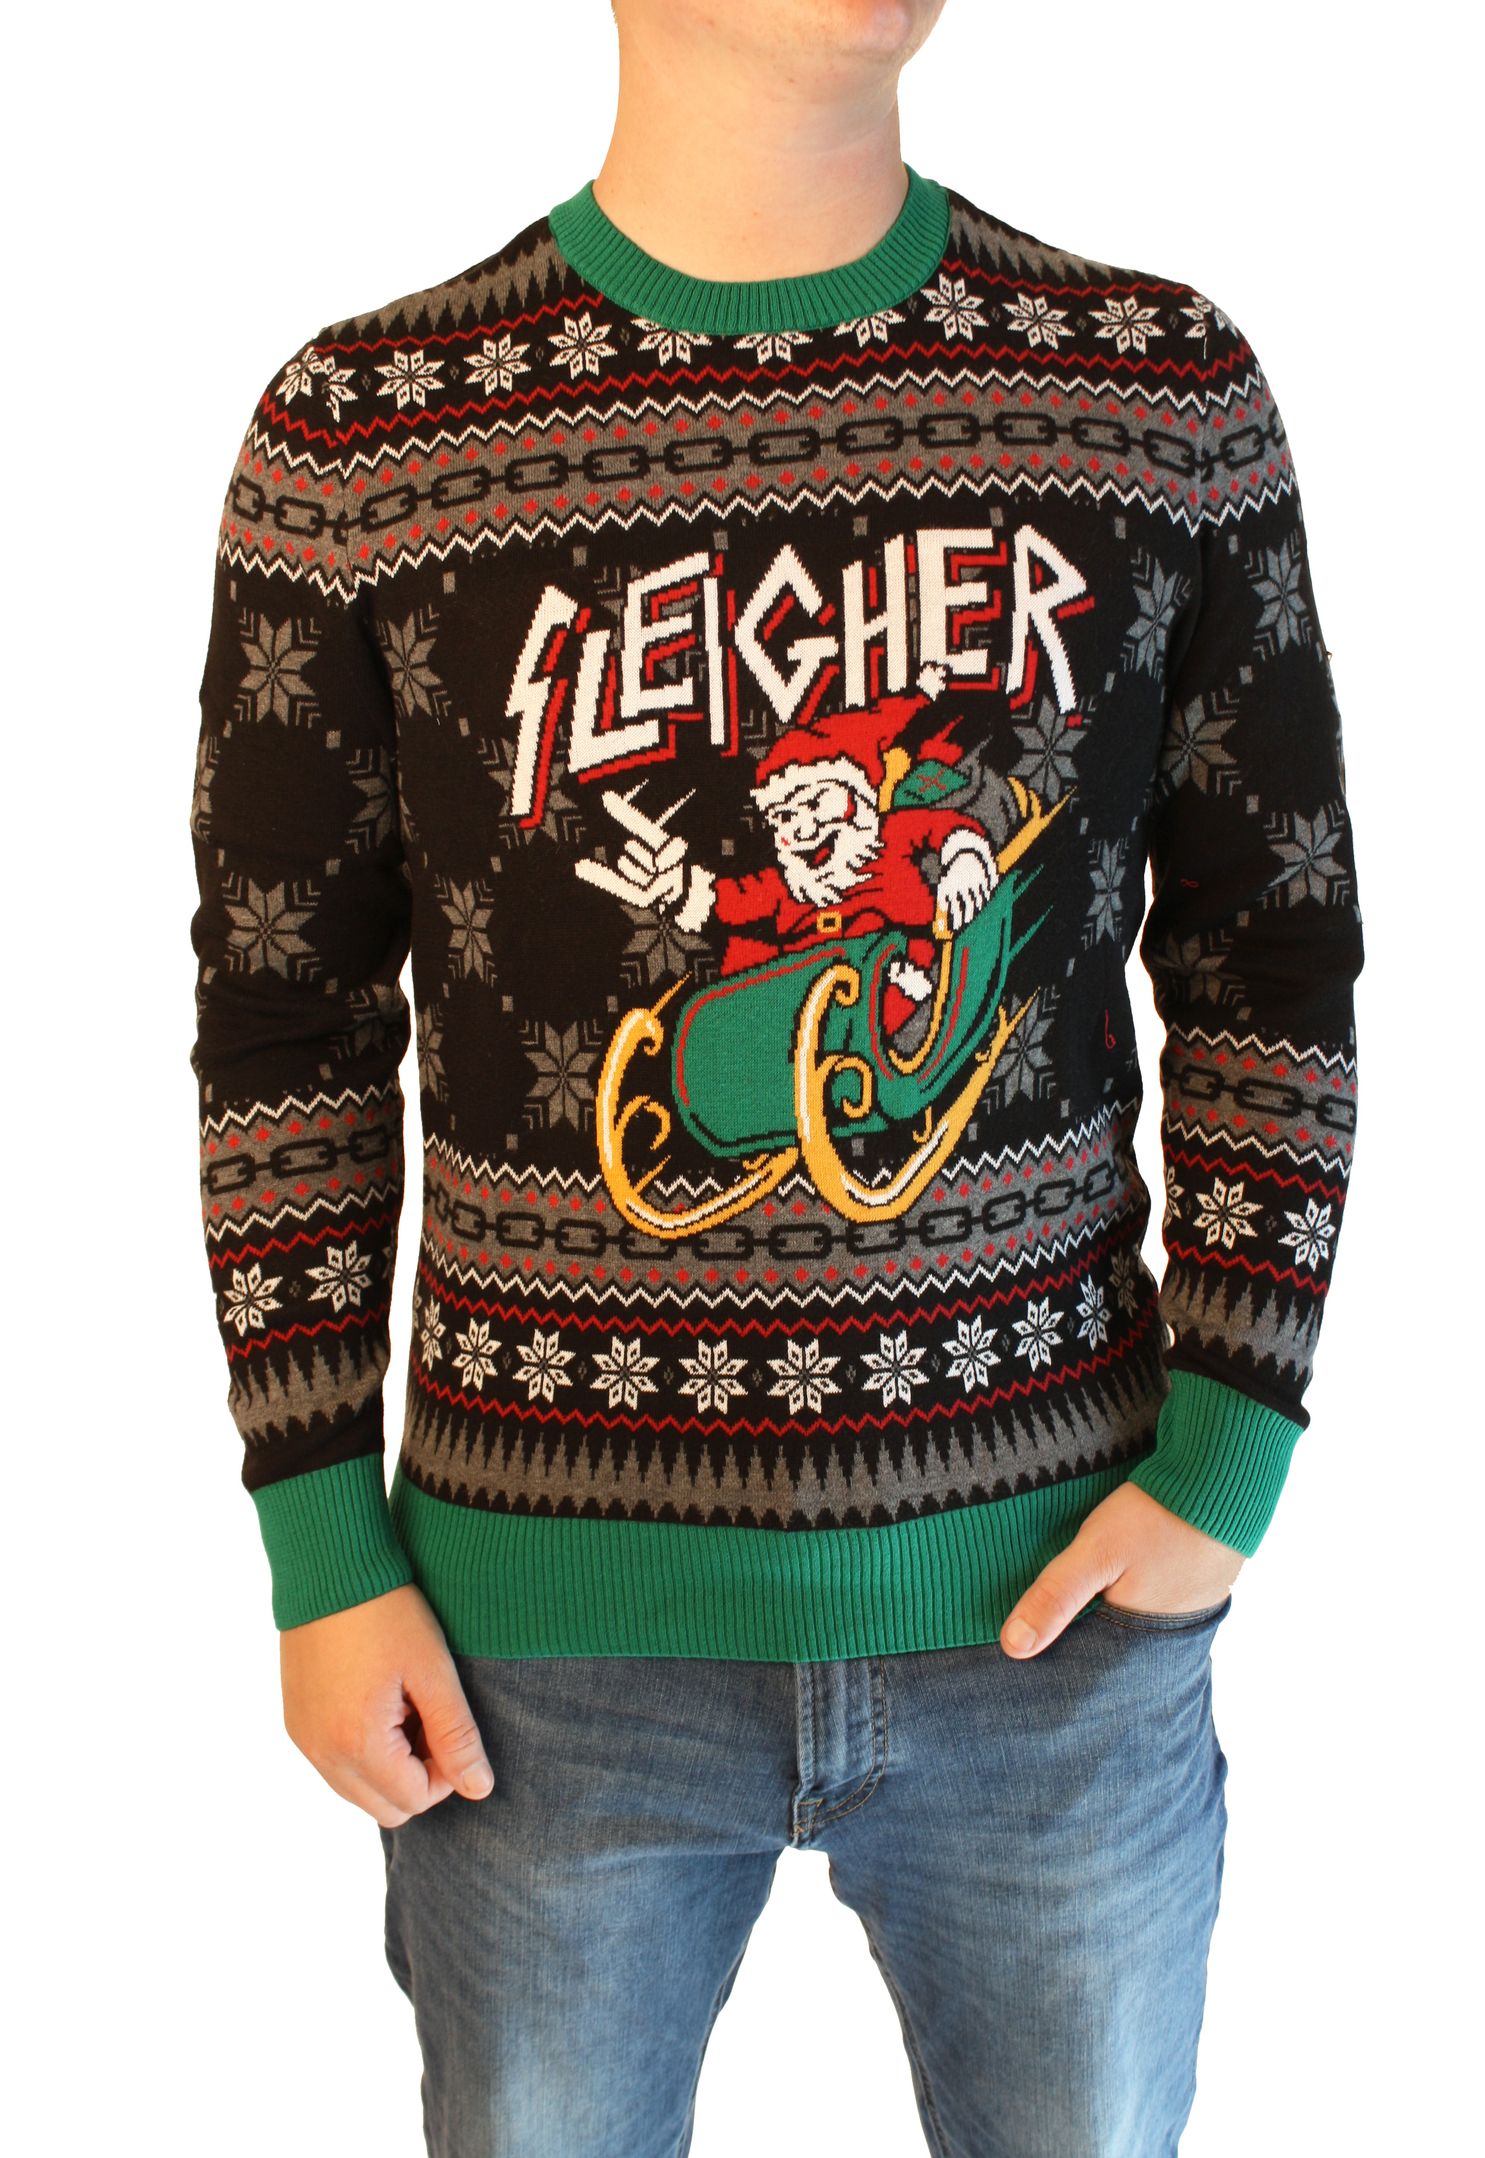 Ugly Christmas Sweater Men’s Xmas Metal Sleigher Santa Sleigh ...